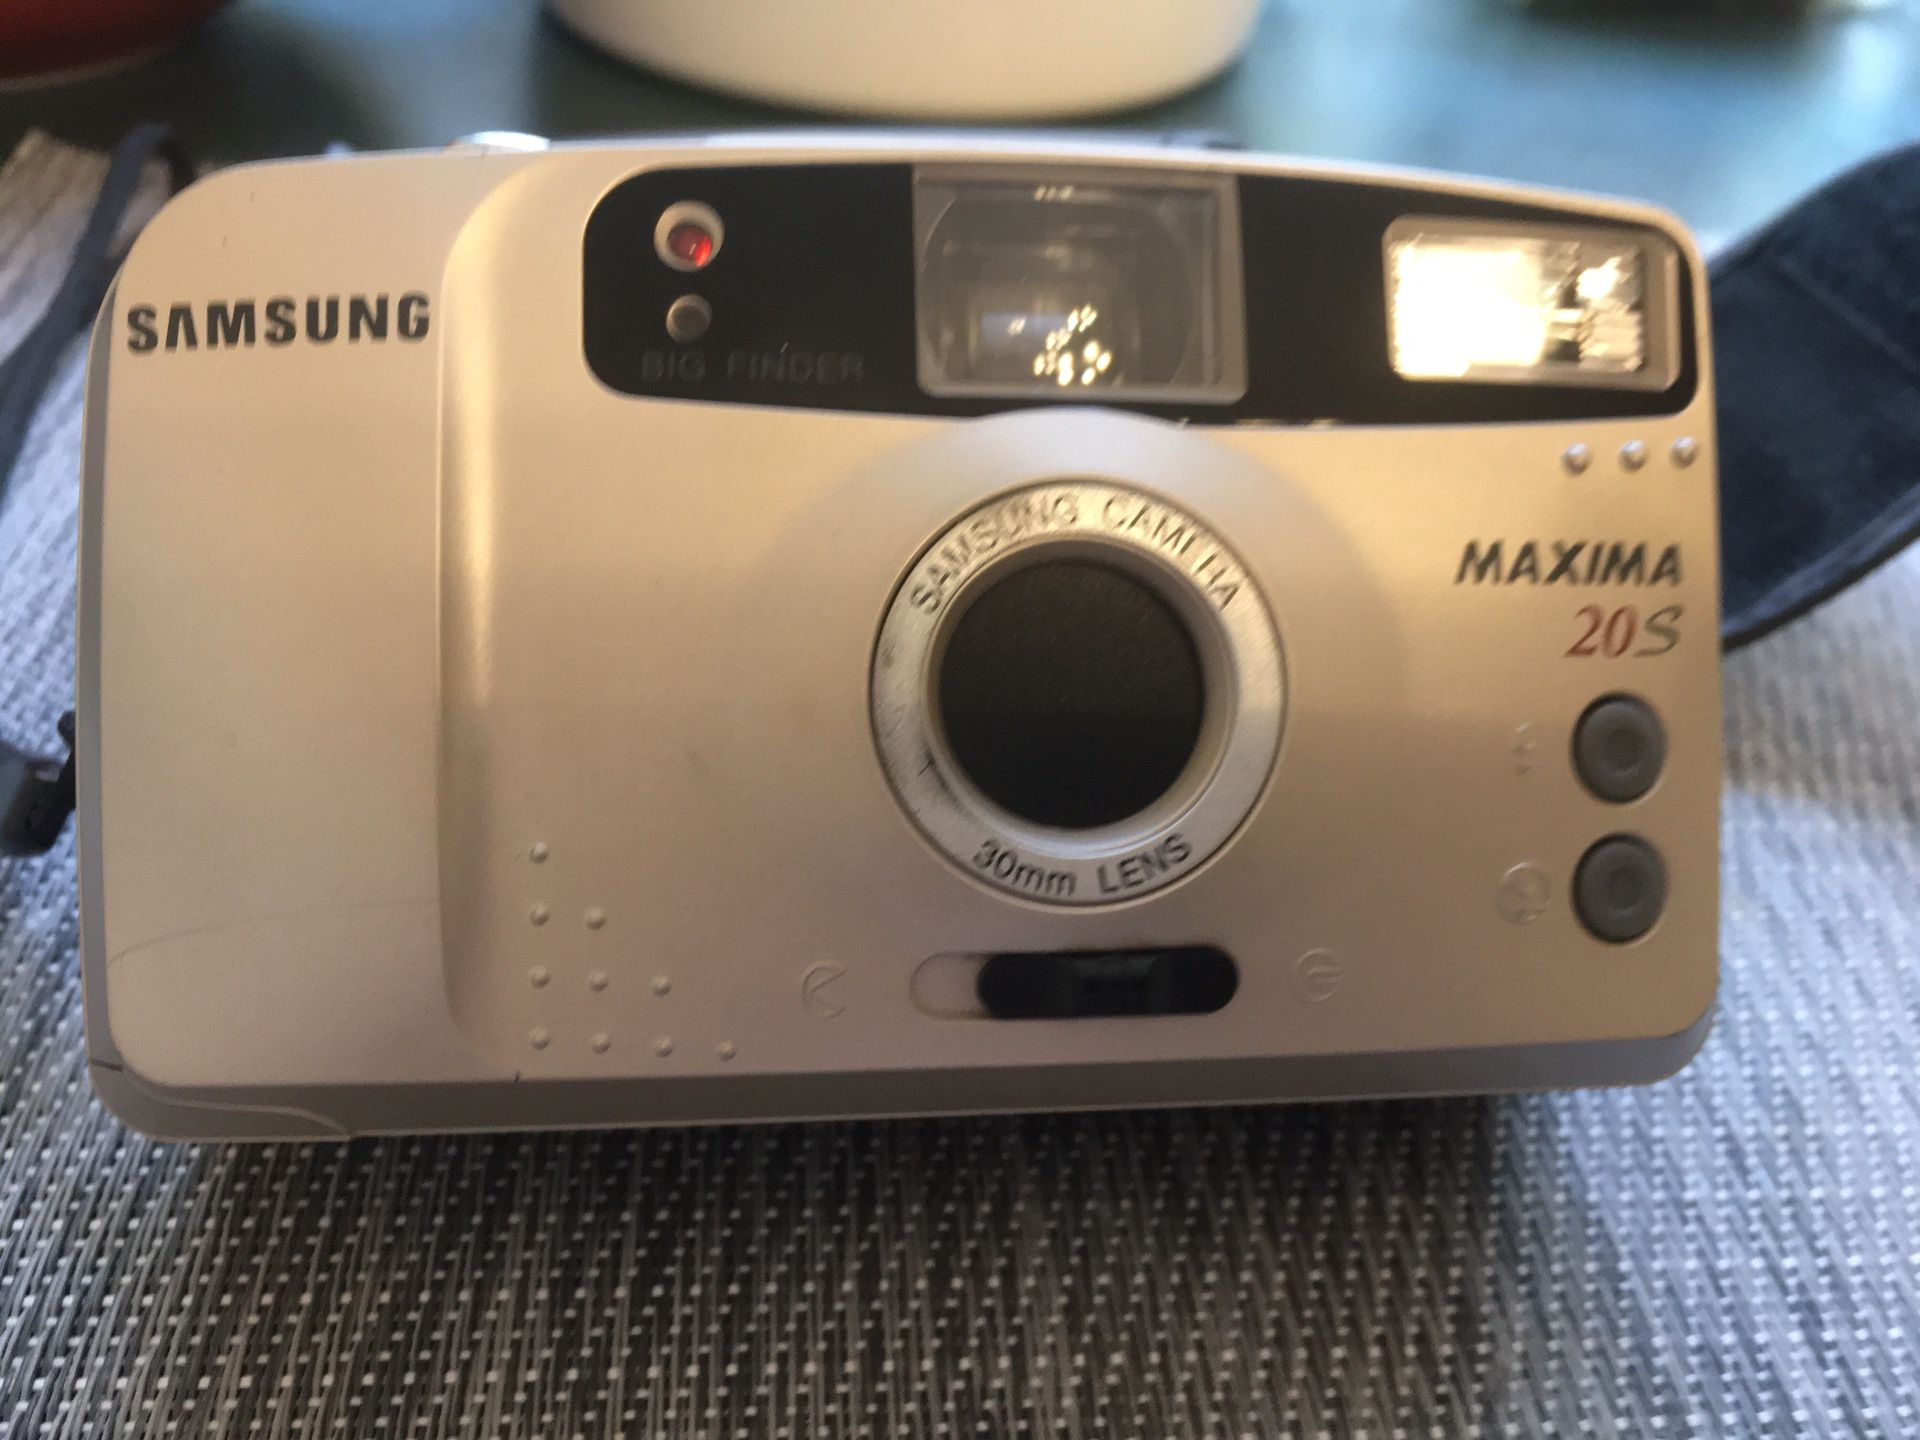 Samsung camera maxima 20S, 30mm lens